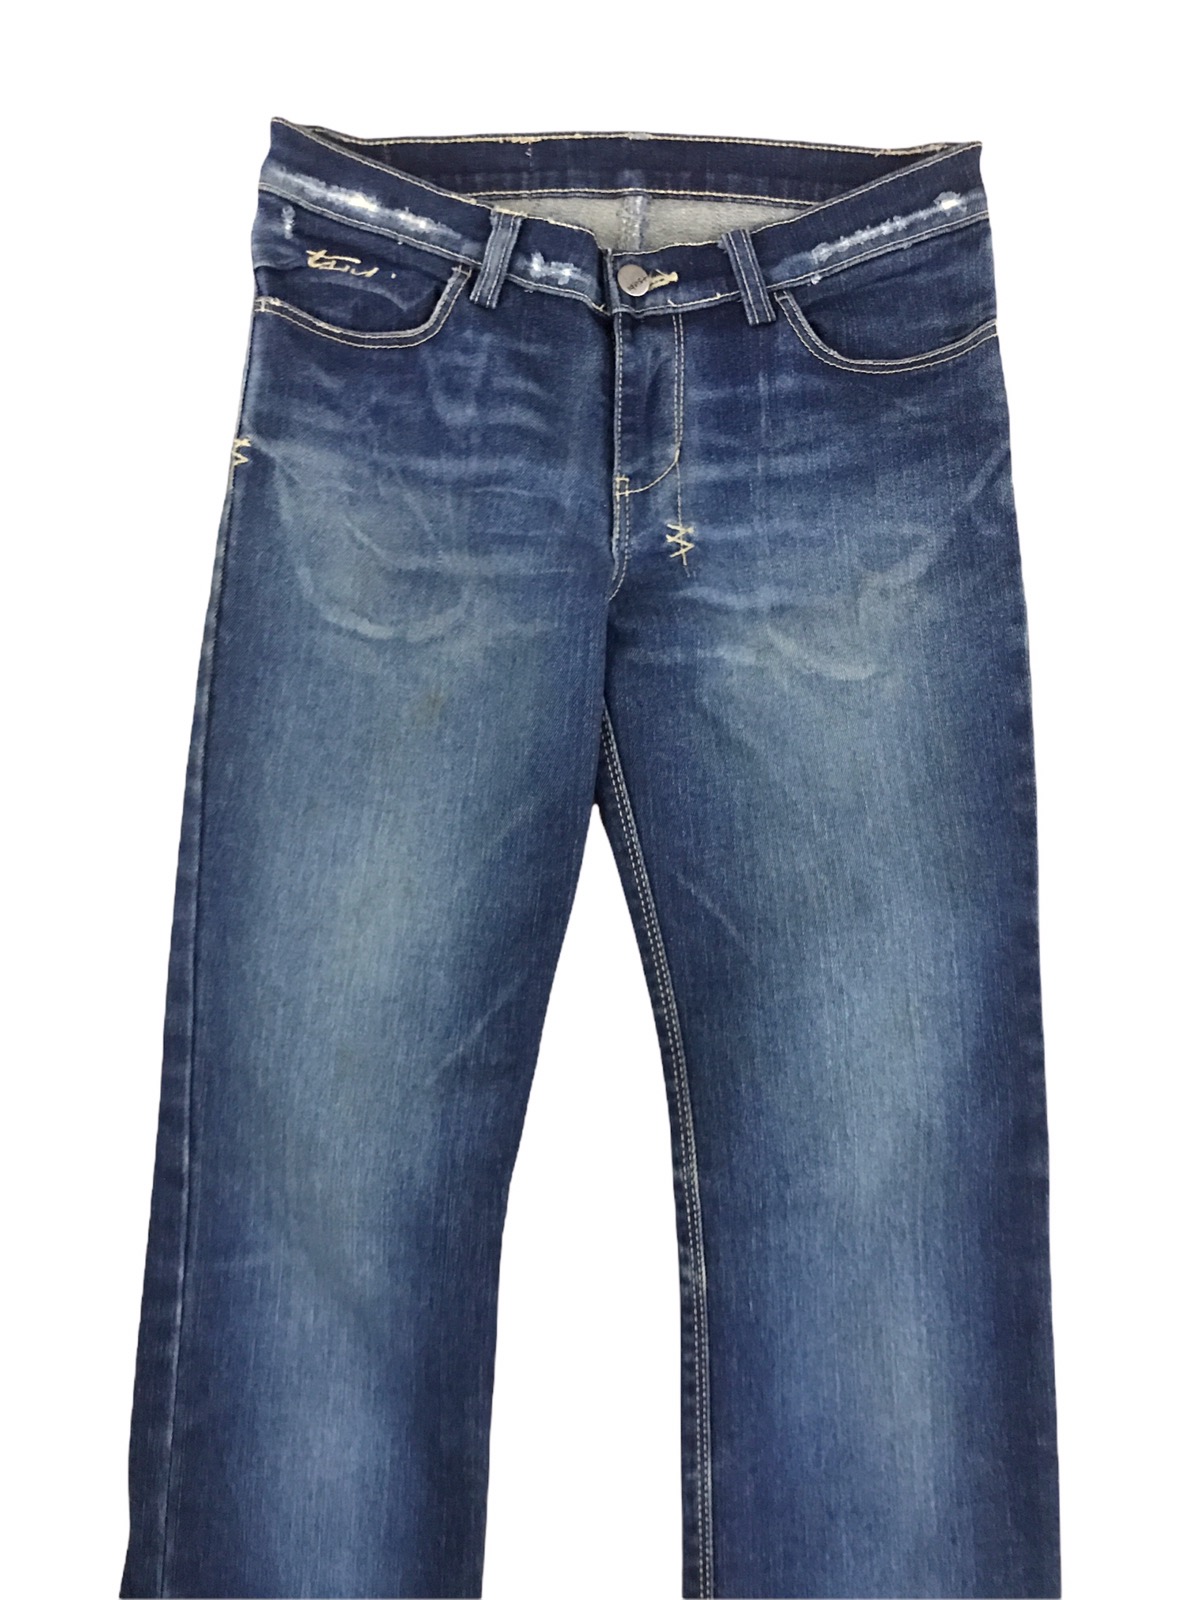 Ksubi Distressed Jeans - 3